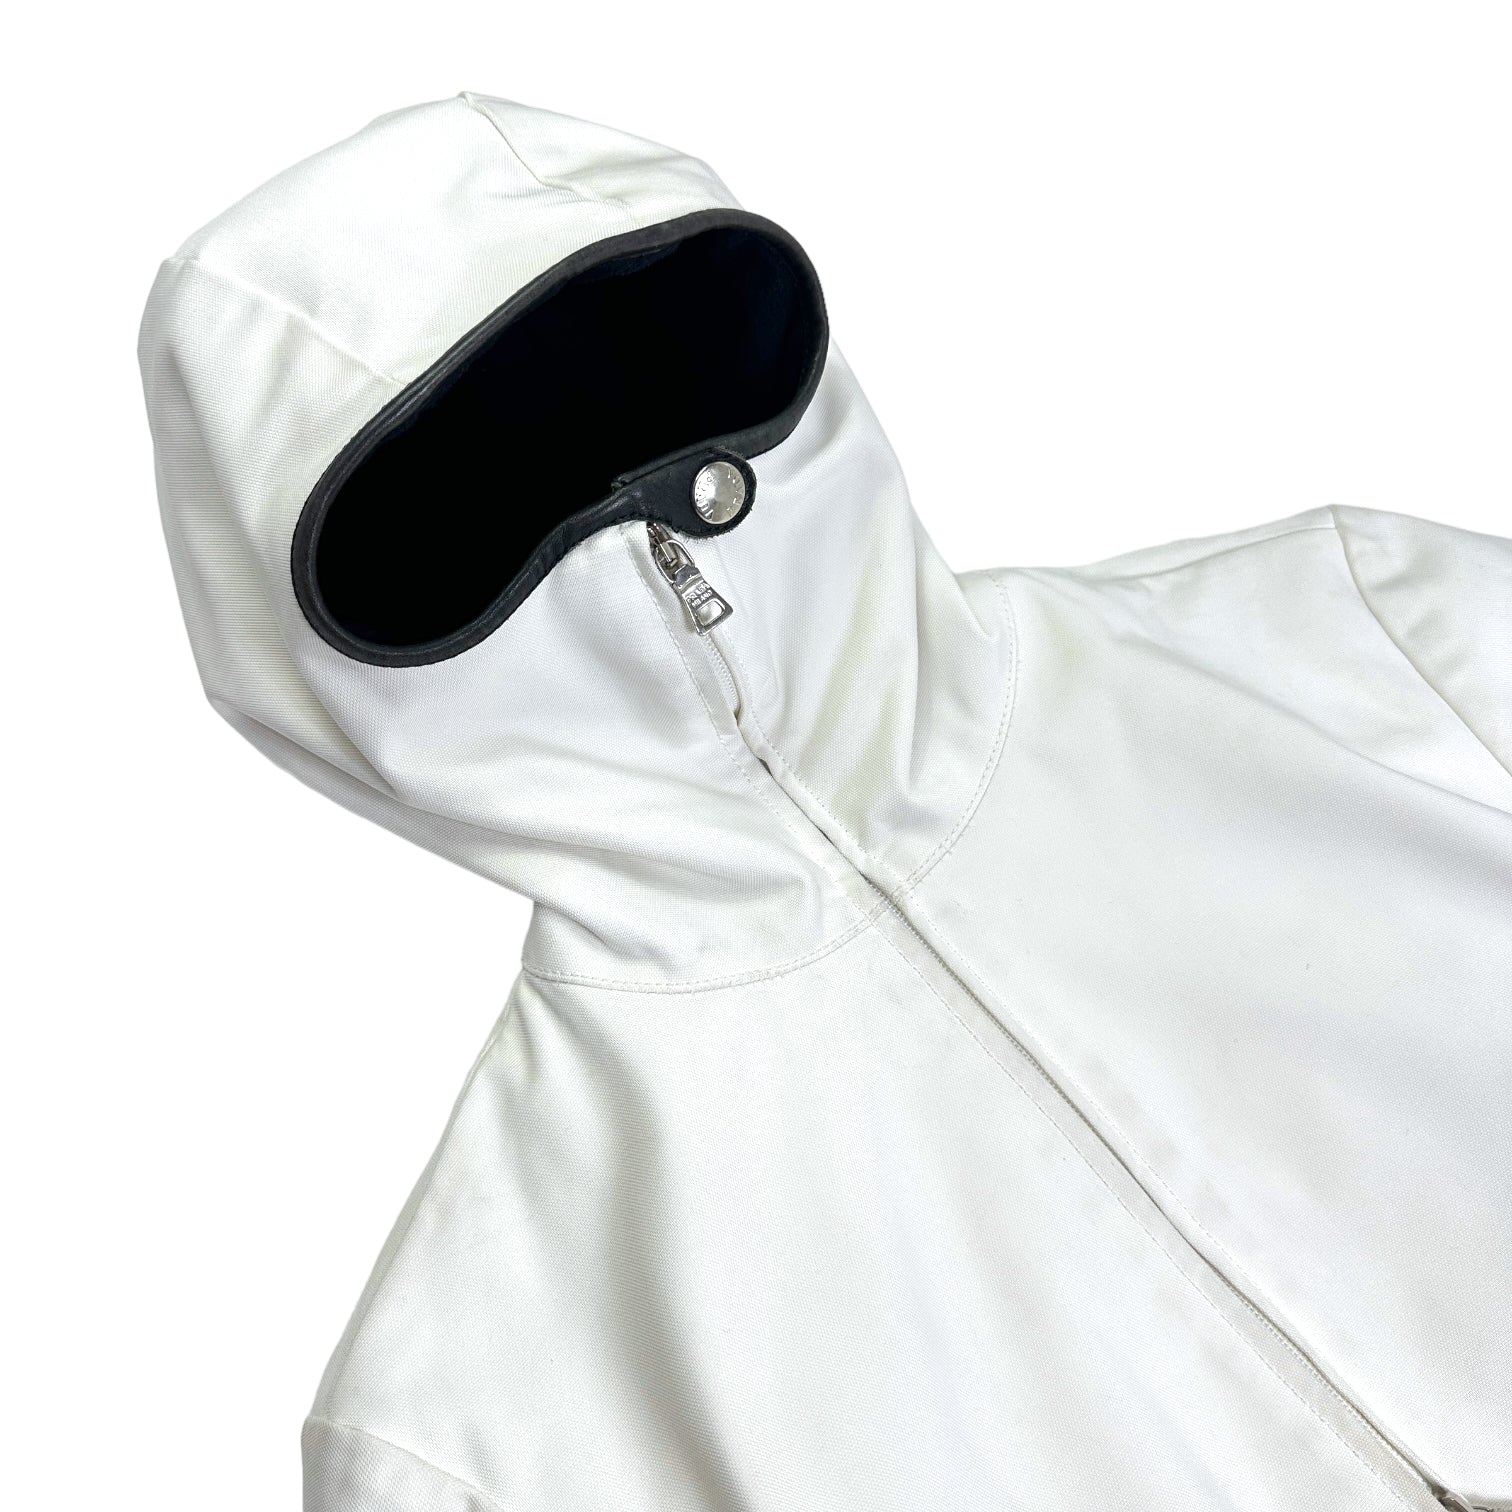 AW99' Prada Sport Pure White Balaclava Jacket - Small / Medium